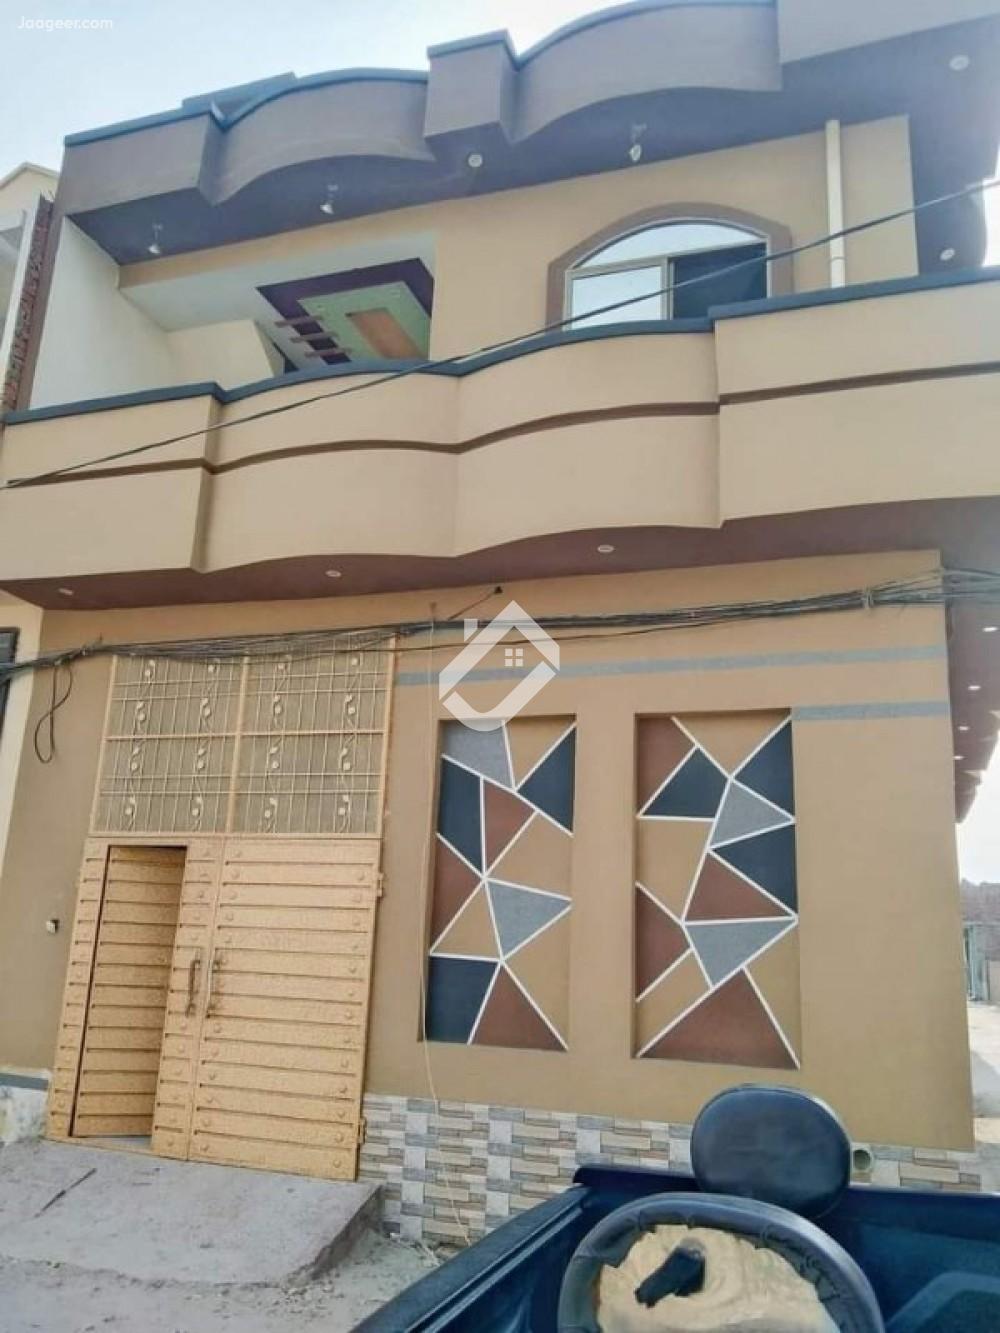 Main image 6 Marla Corner House For Sale In Khokhar Town Faisalabad Road Faisalabad Road